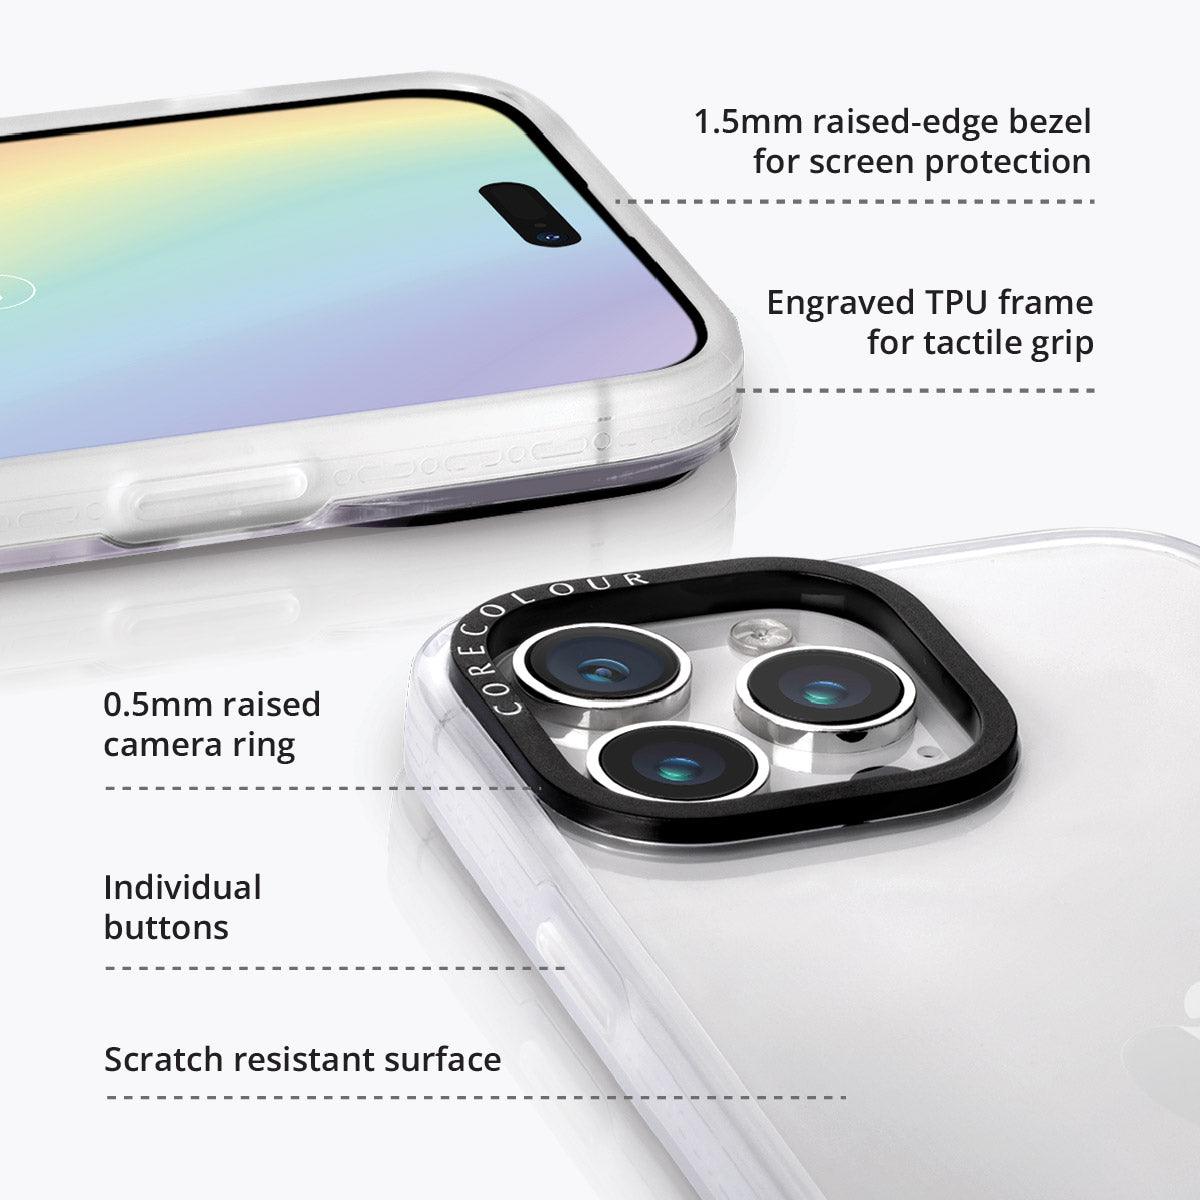 iPhone 12 Pro Max Pink Illusion Phone Case - CORECOLOUR